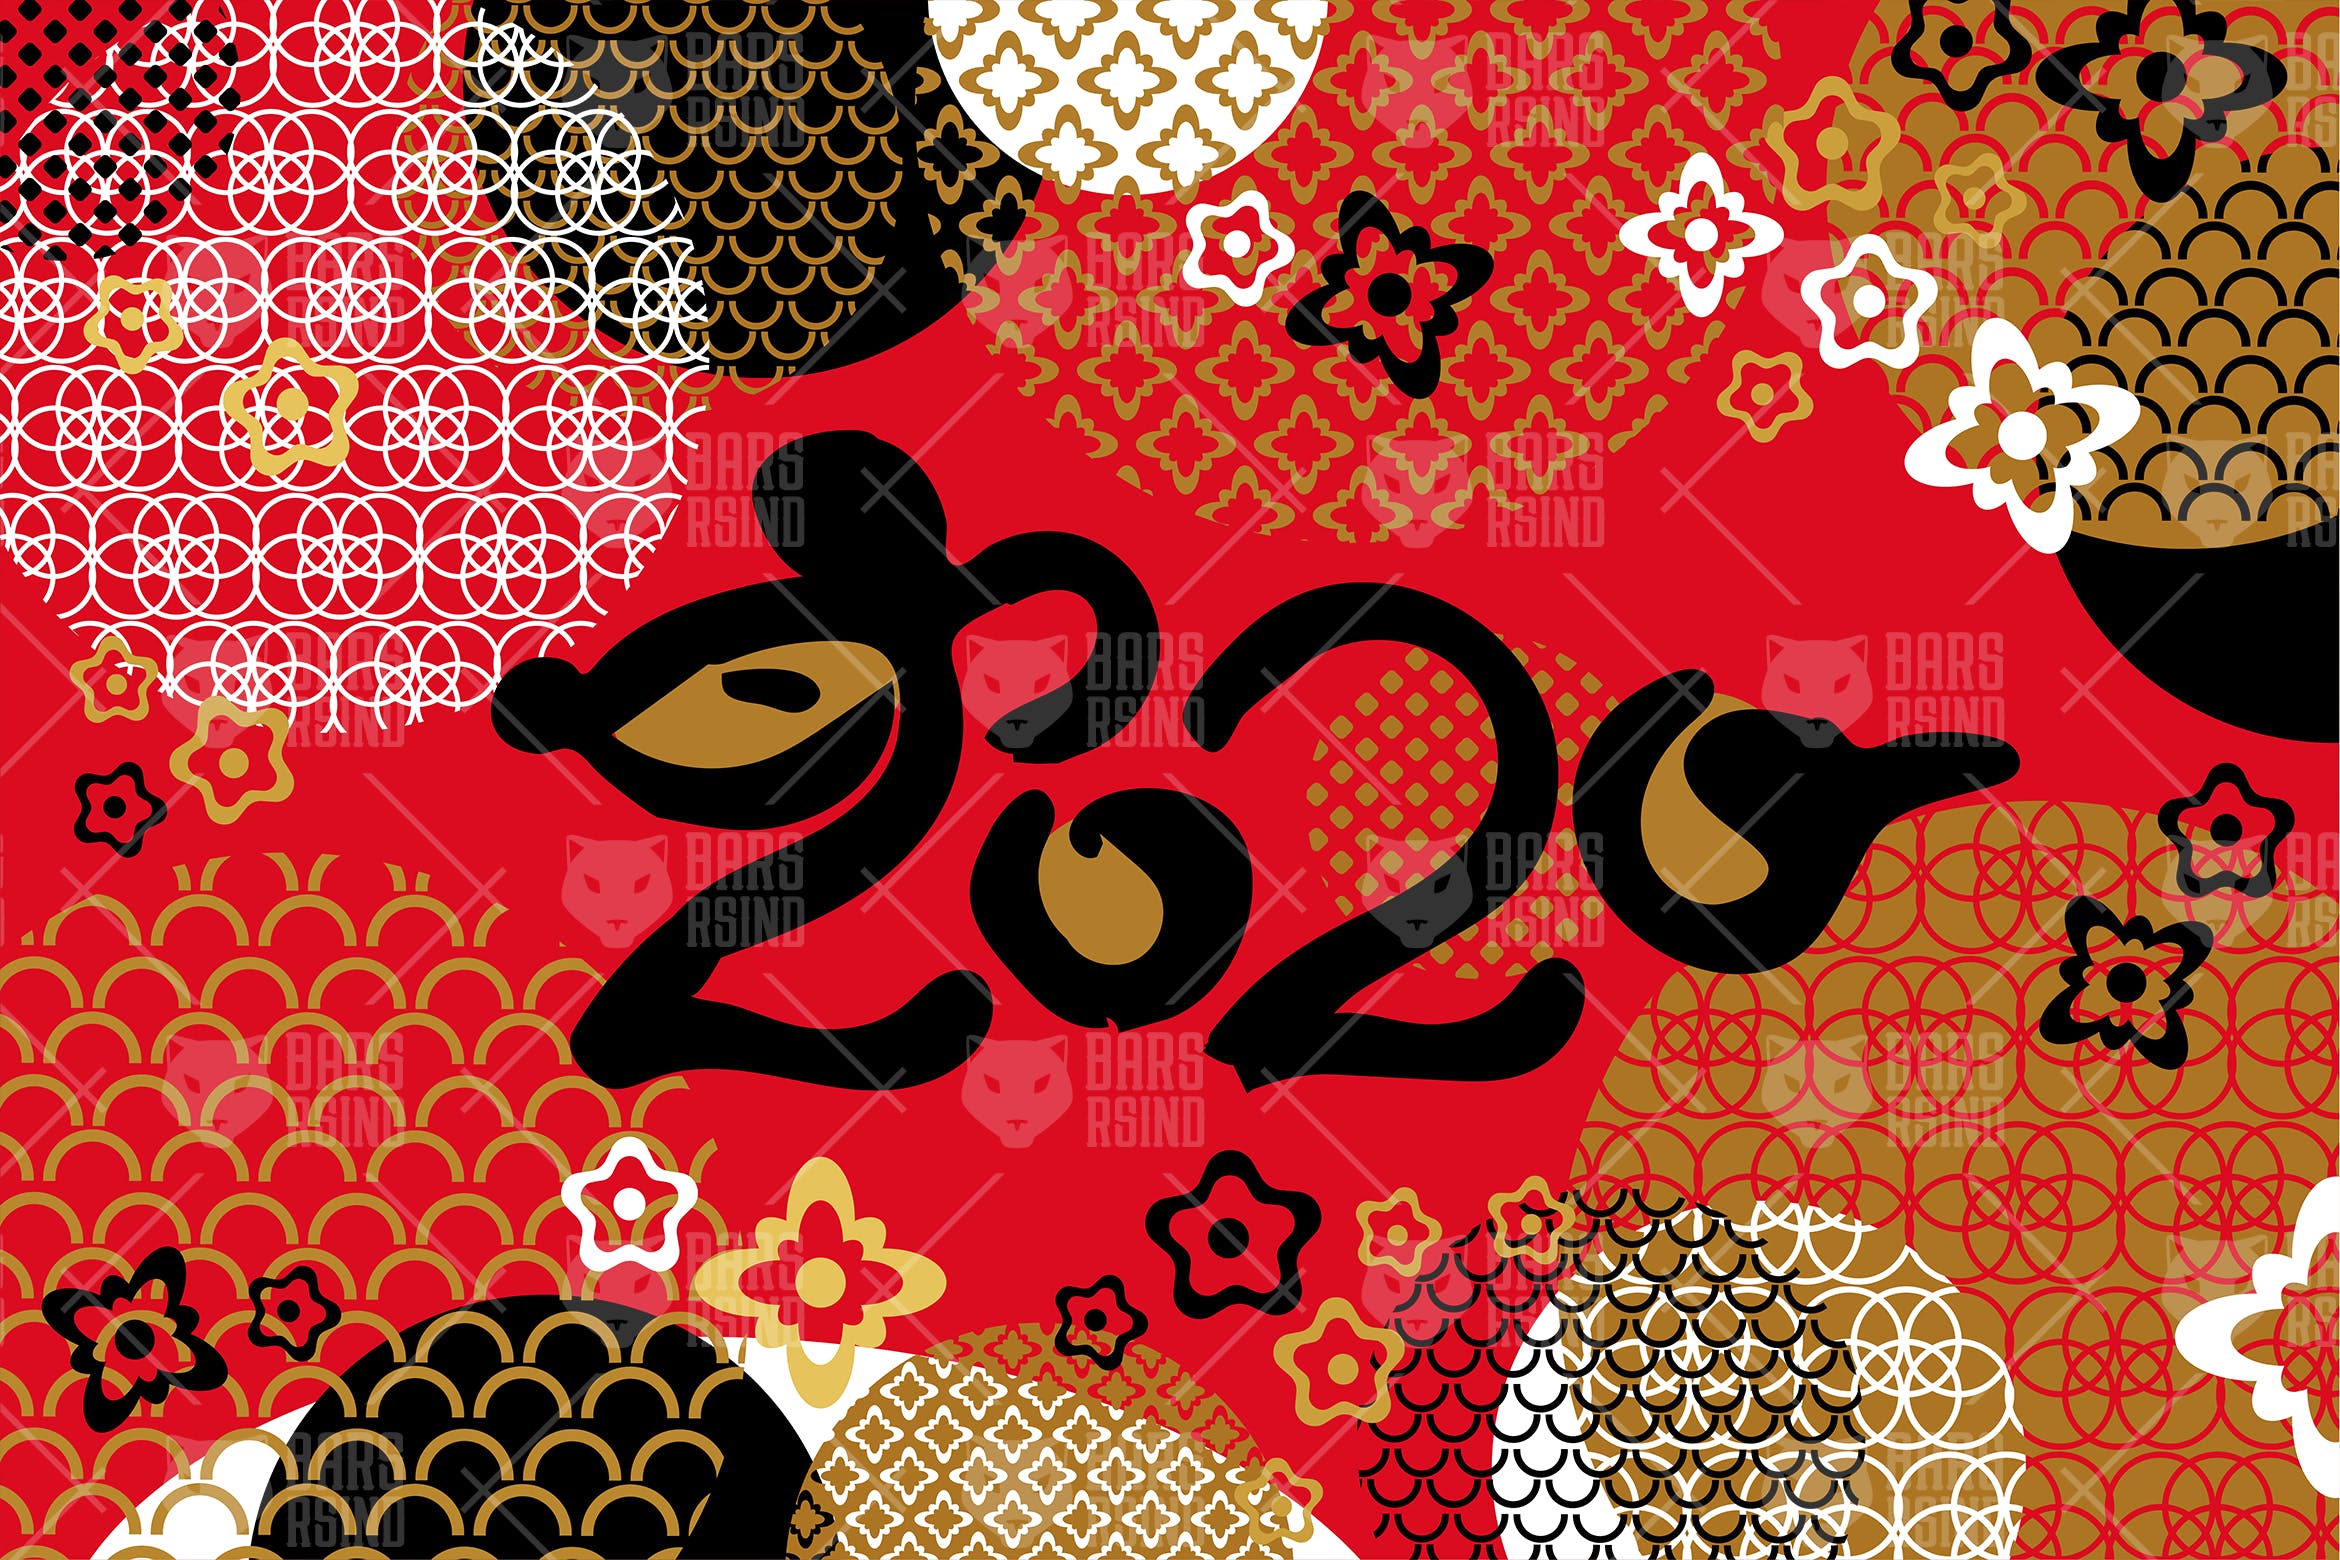 中国风2020年新年主题矢量Banner背景图设计素材 2020 Chinese New Year Greeting Banner插图